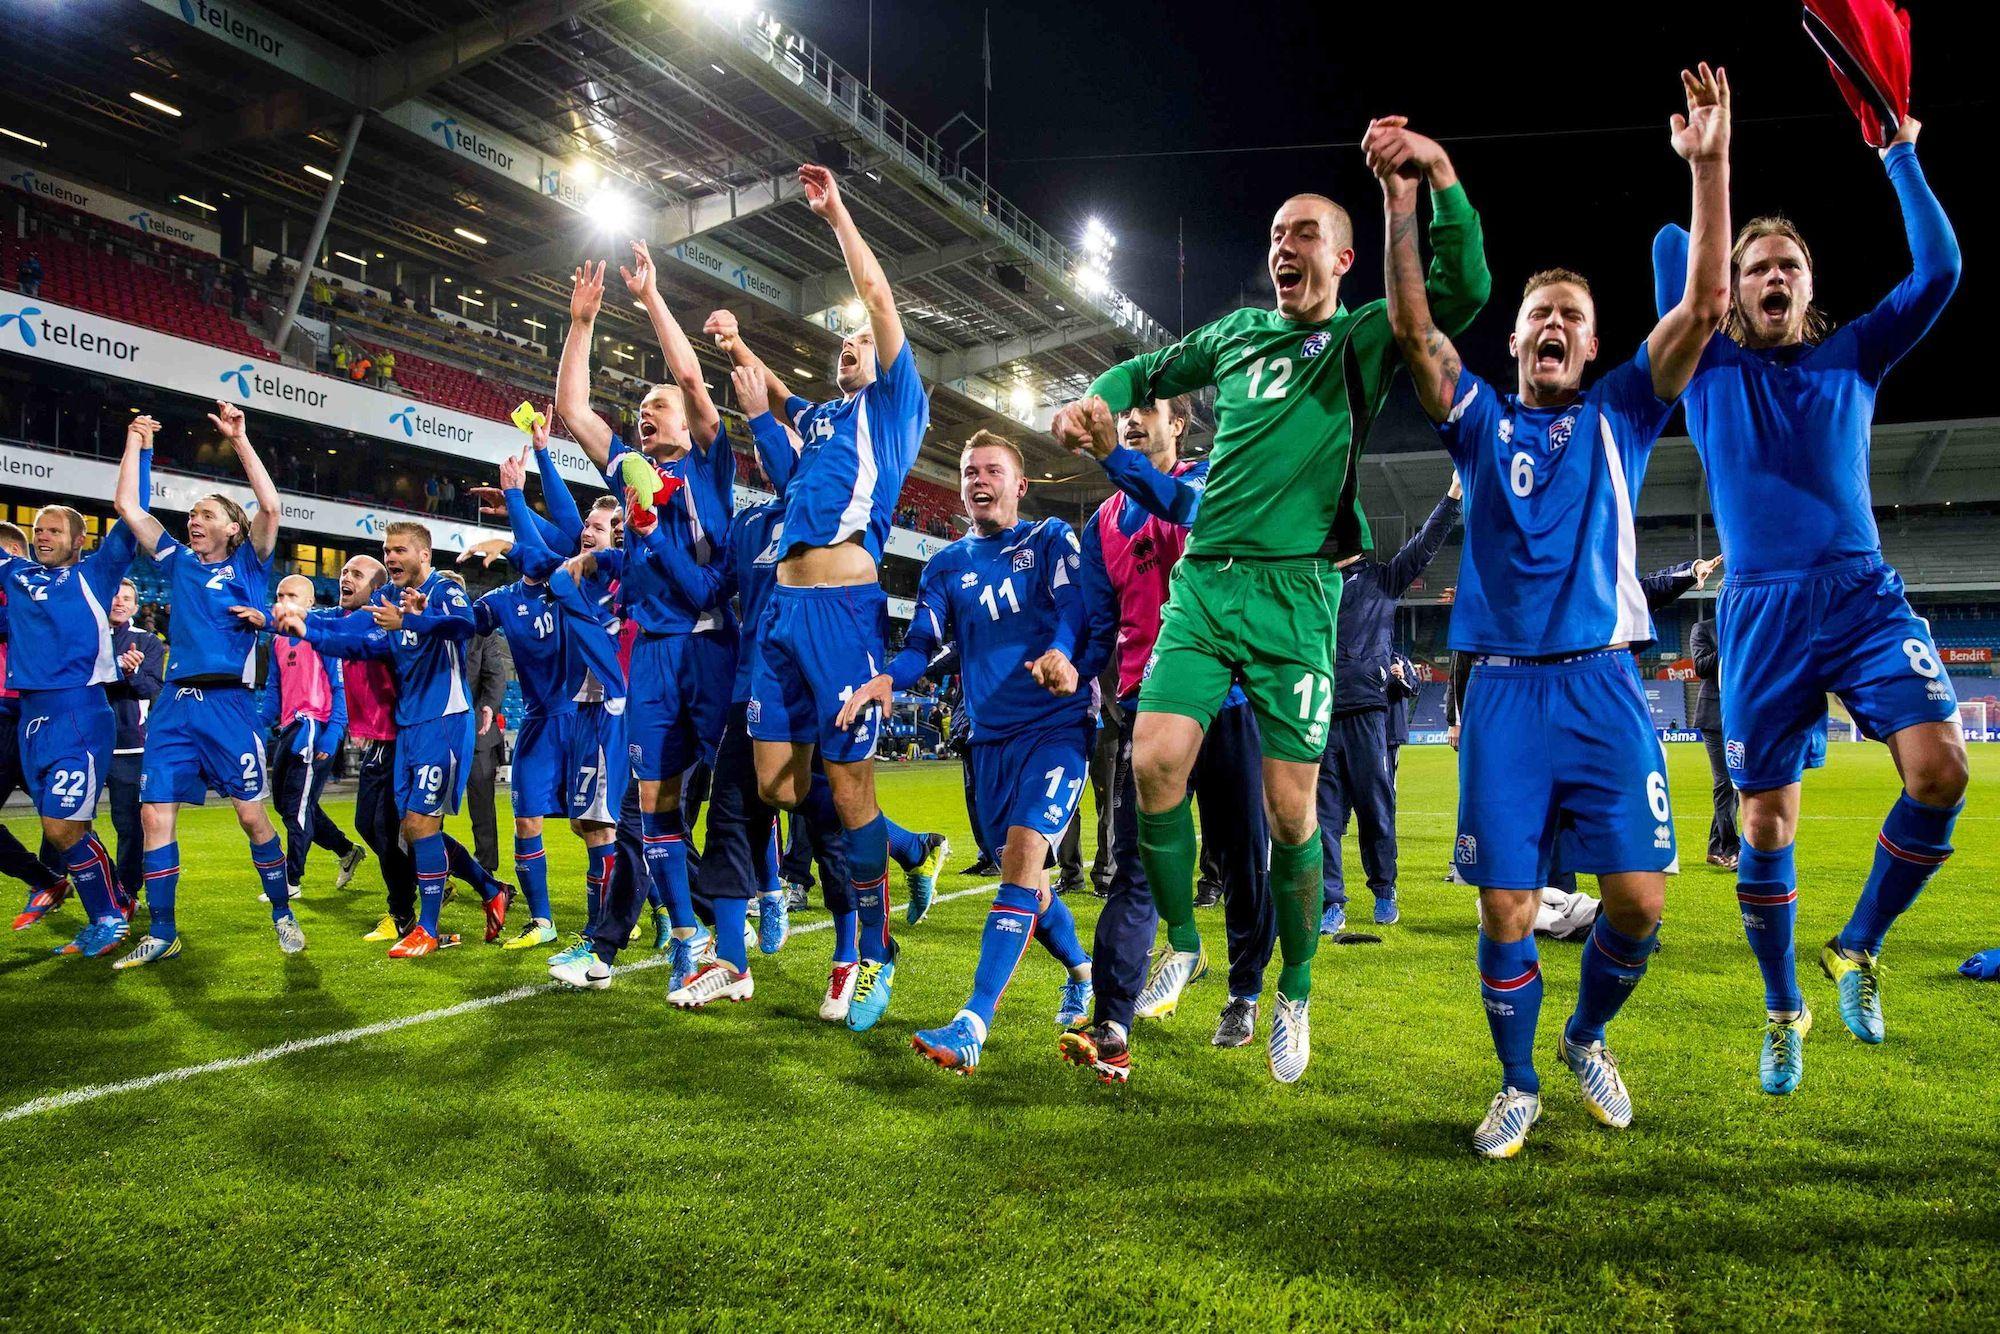 Iceland National Football Team Wallpaper Wallpaper